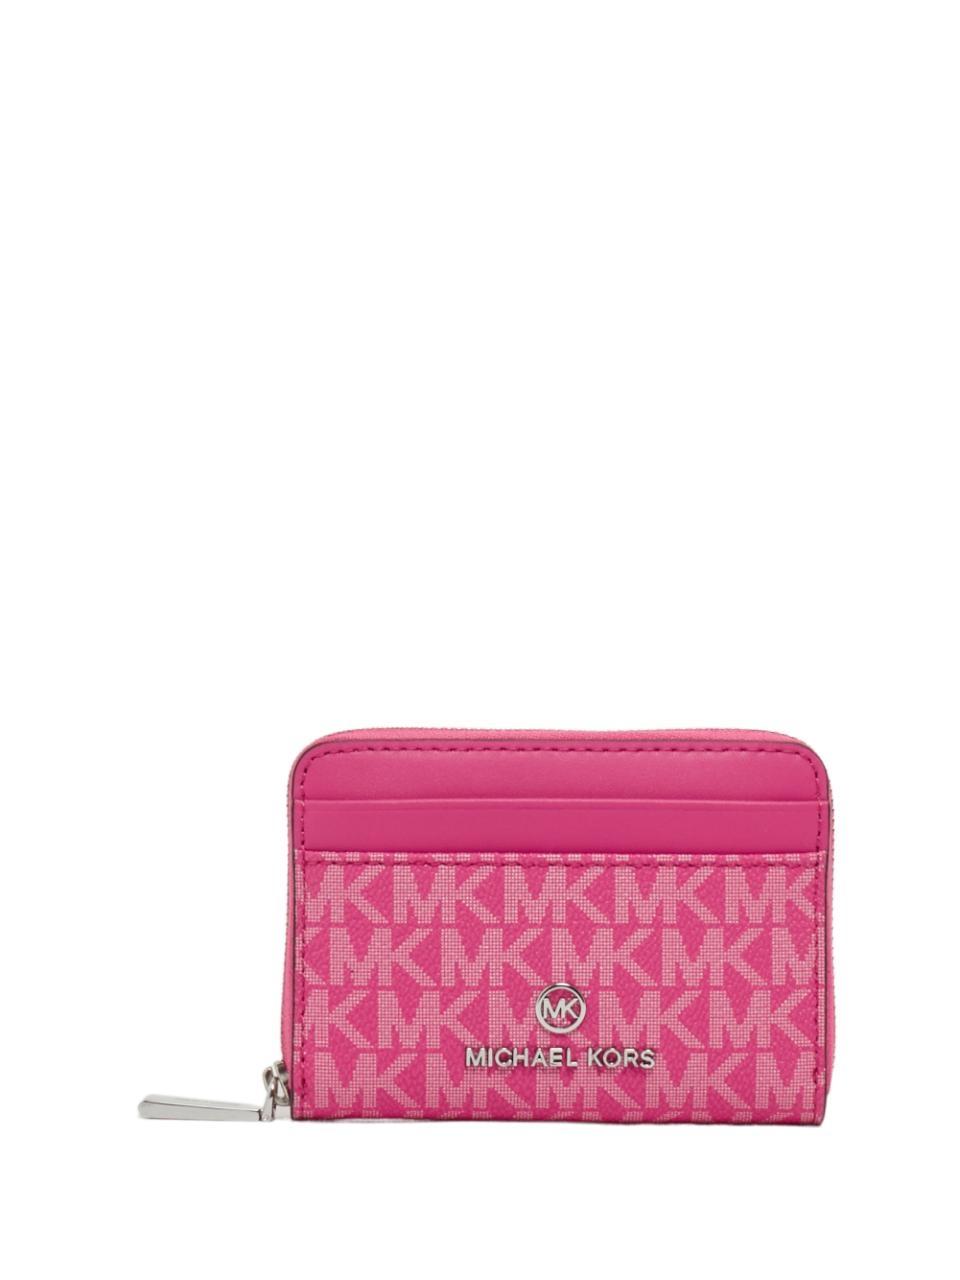 Michael Kors Wallet in Pink | Lyst